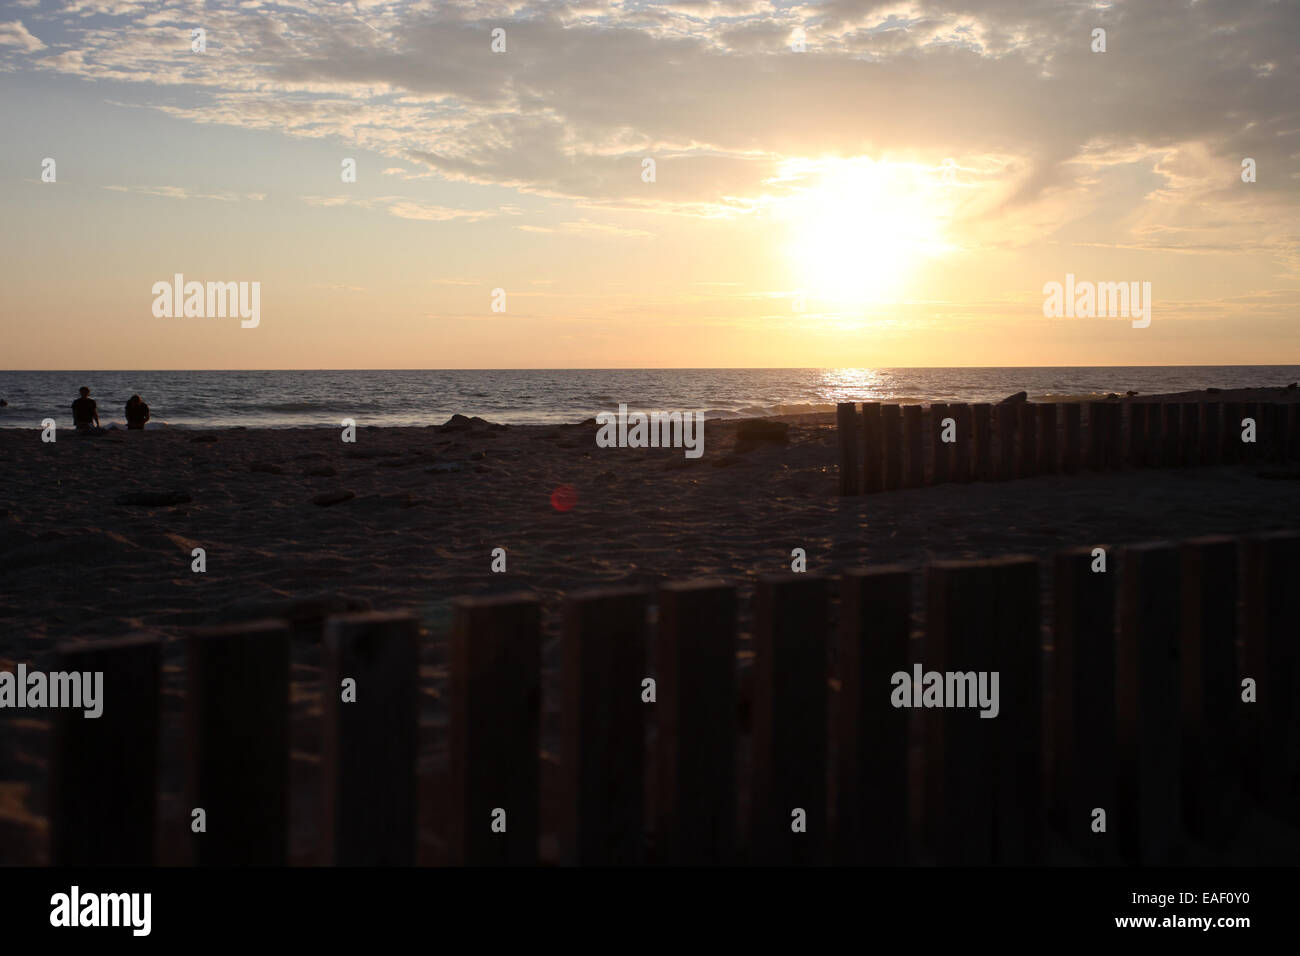 Sonnenuntergang in Palmar Strand, Sonnenuntergang in Palmar Beach, Caidz, Andalusien, Spanien, Strand, Playa, Sommer Sonnenuntergang, s Caidz, Andalusien, Spanien Stockfoto